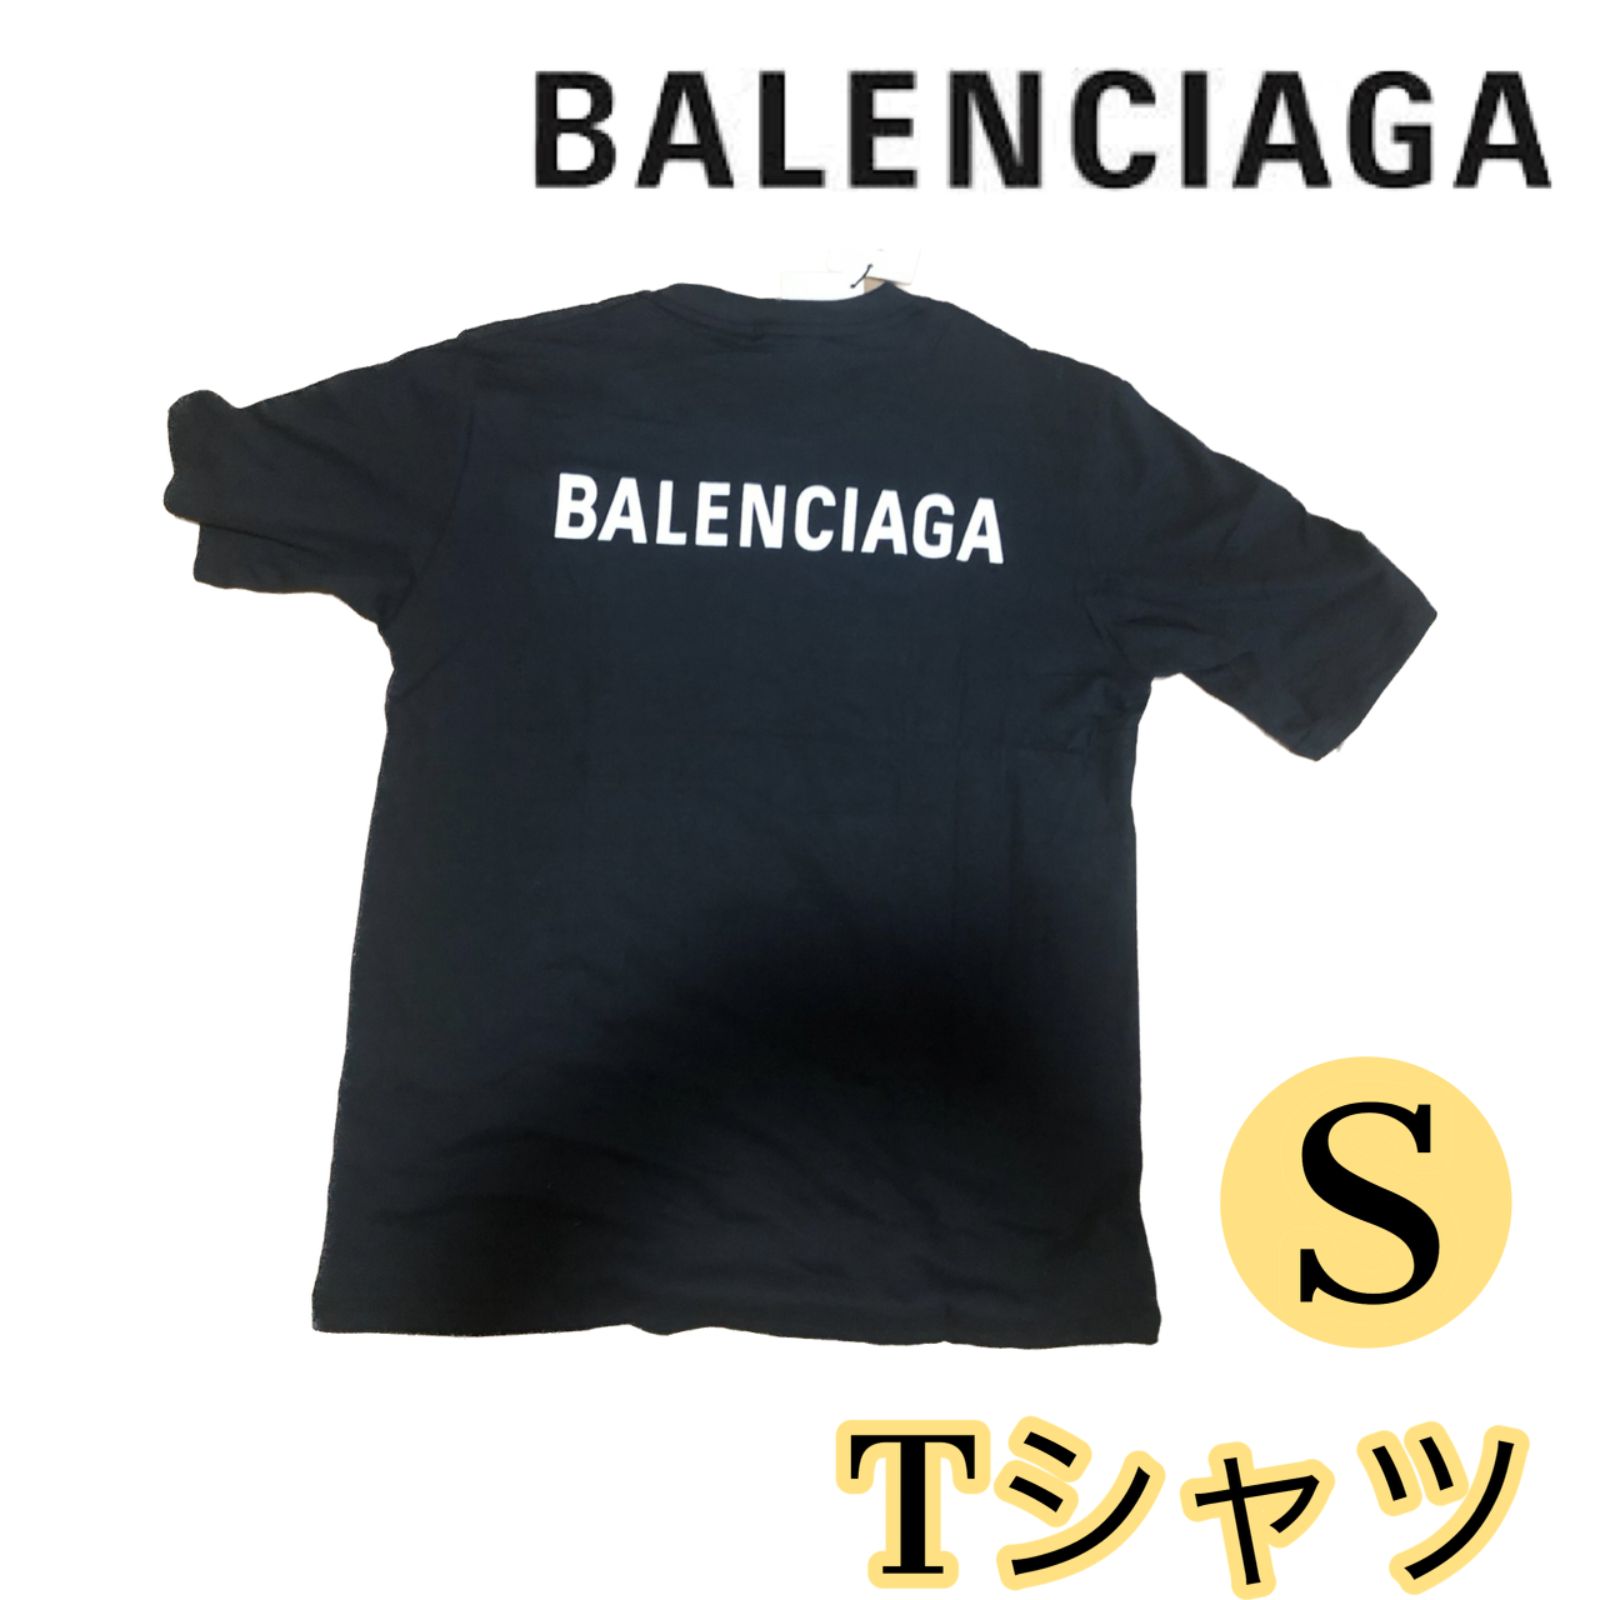 balenciaga tシャツ バレンシアガ 黒 メンズ Sサイズ - メルカリ